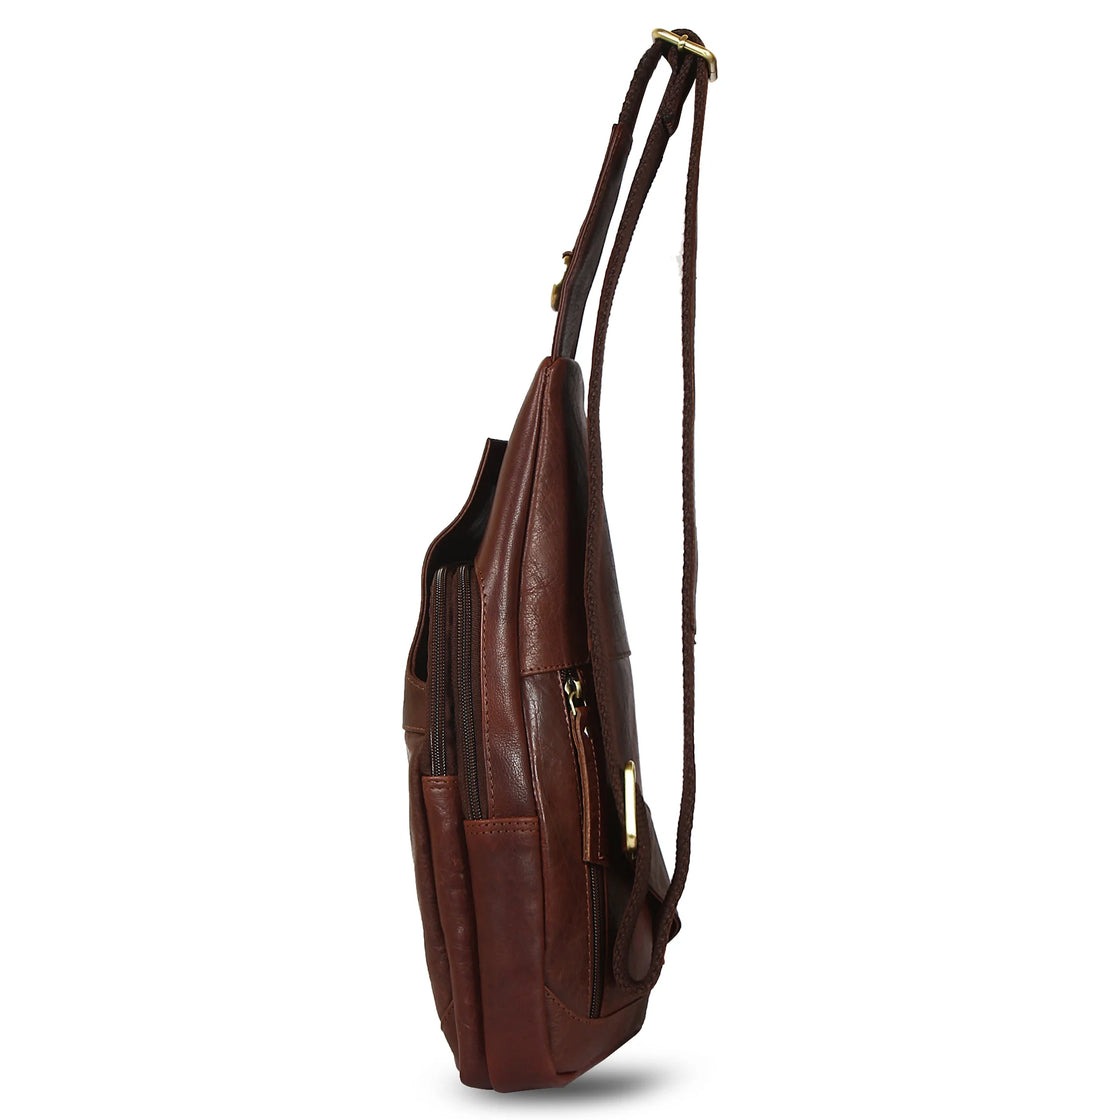 Buy Dark brown Shoulder/Sling bag at